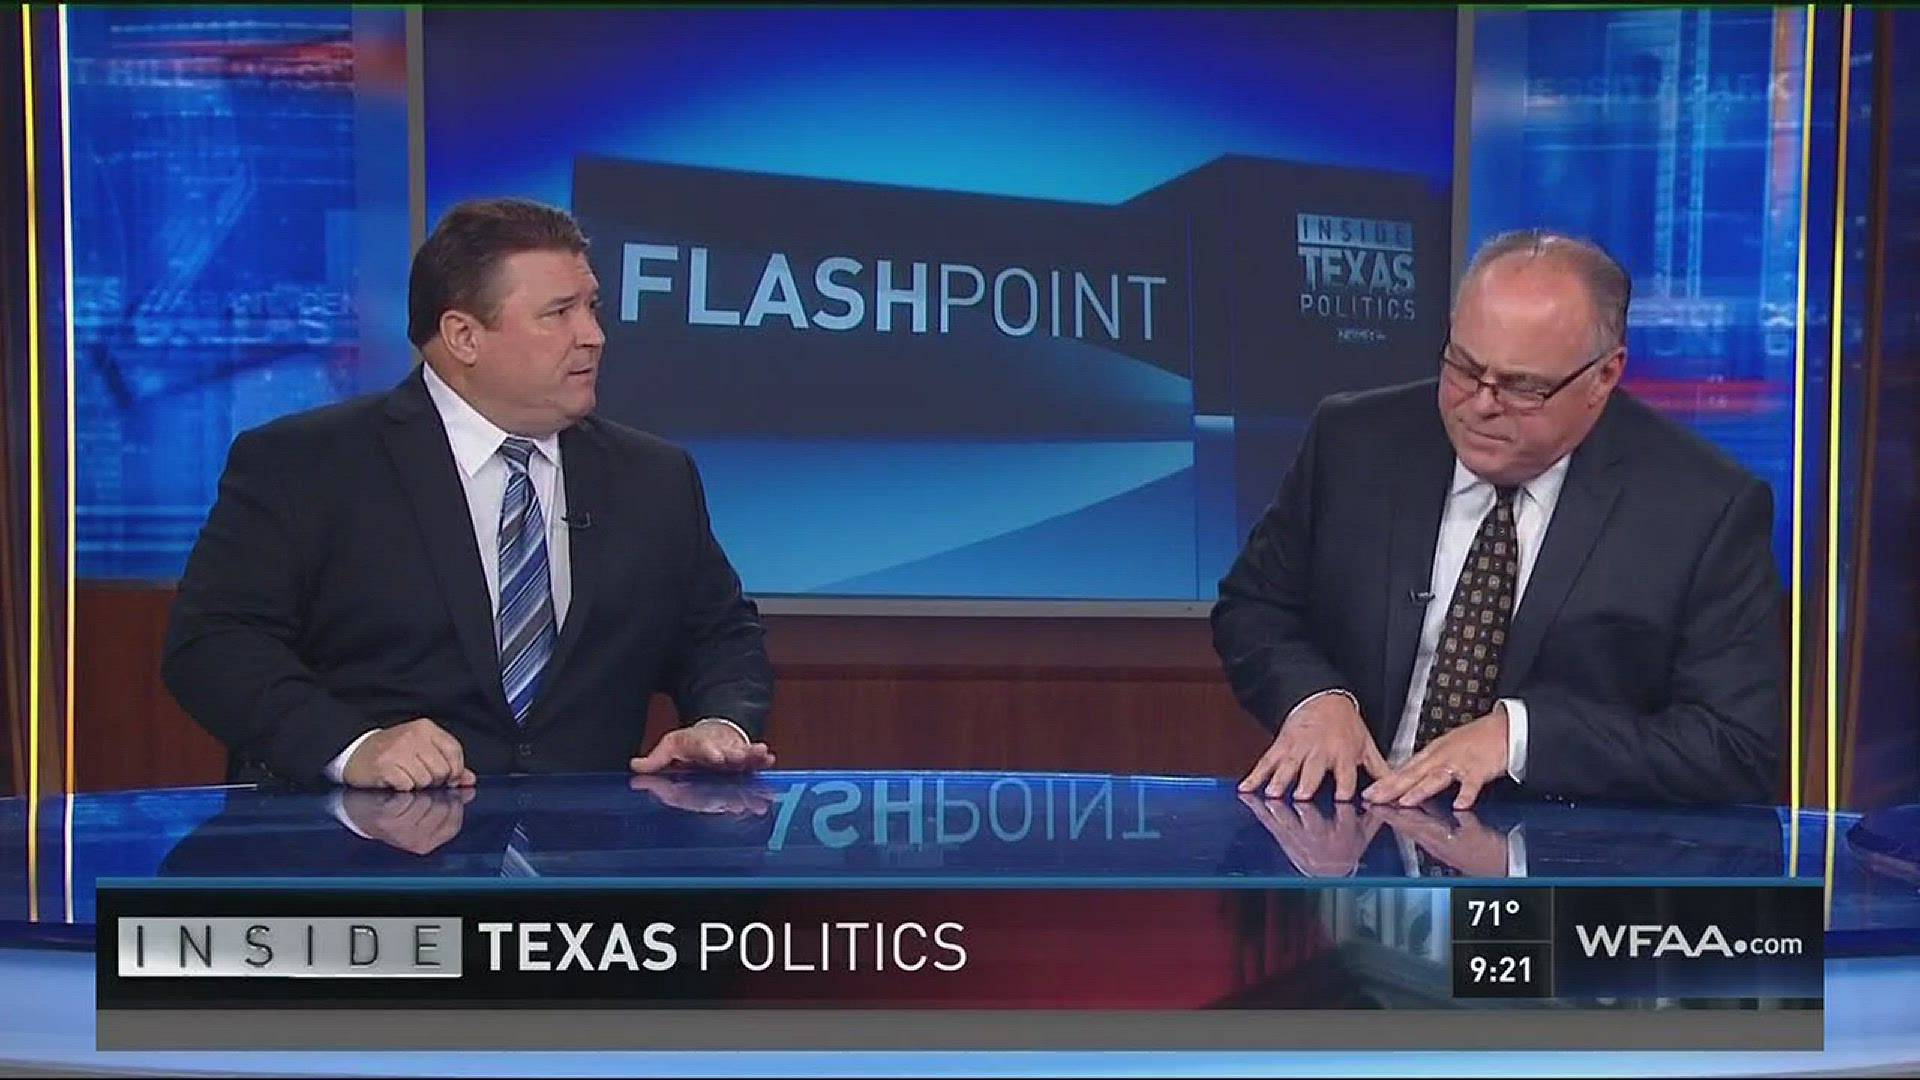 Flashpoint Inside Texas Politics (10/1/17)